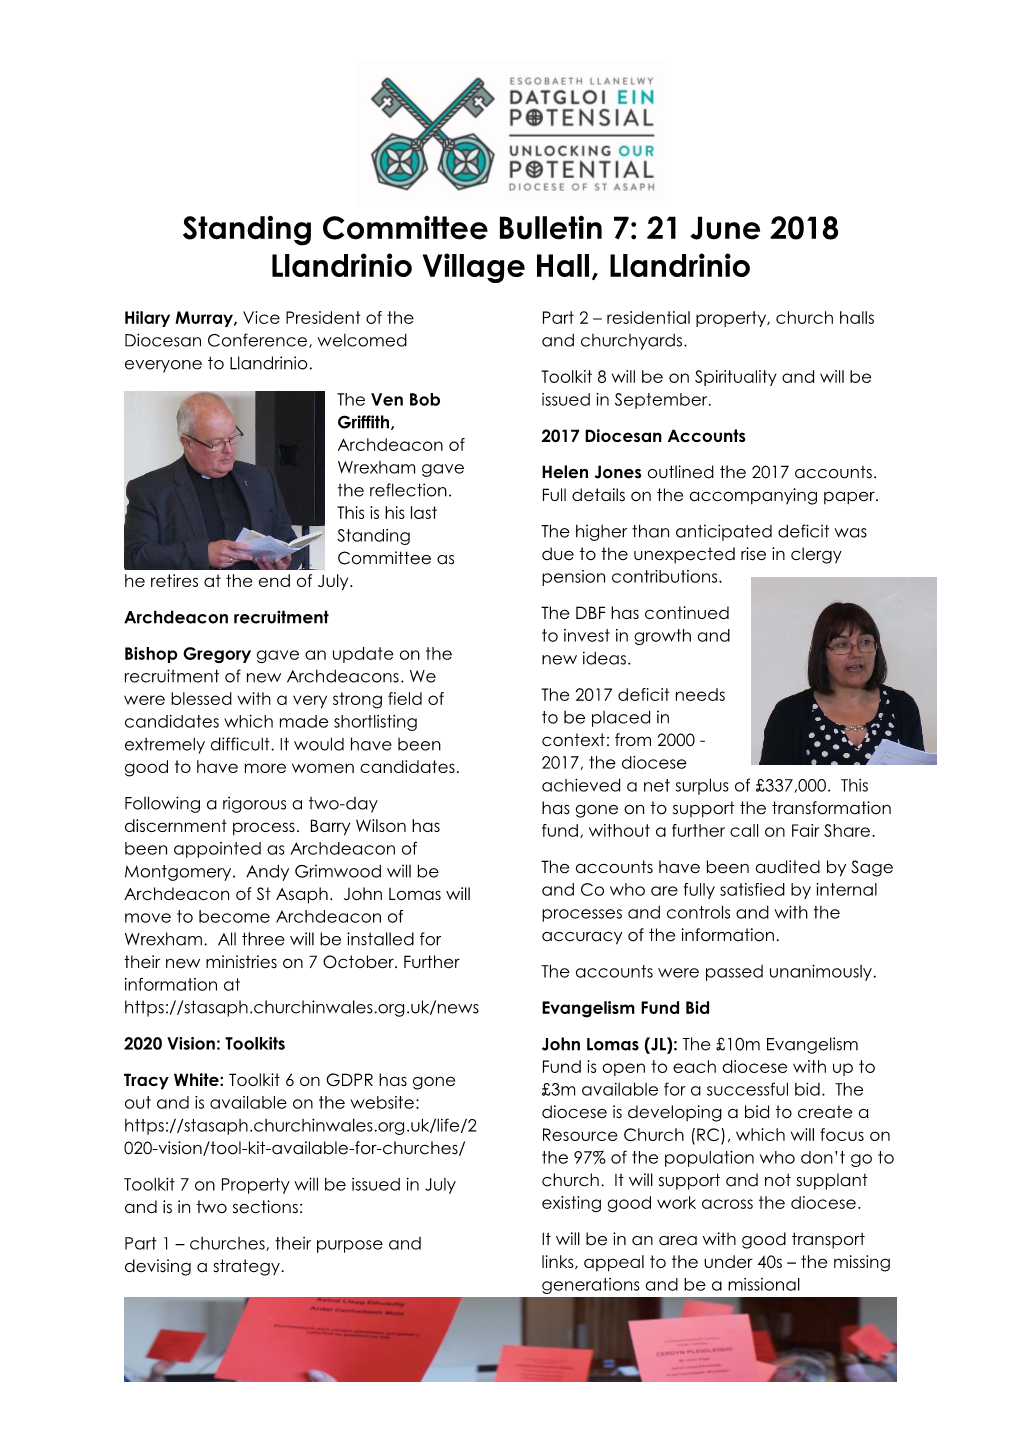 Standing Committee Bulletin 7: 21 June 2018 Llandrinio Village Hall, Llandrinio